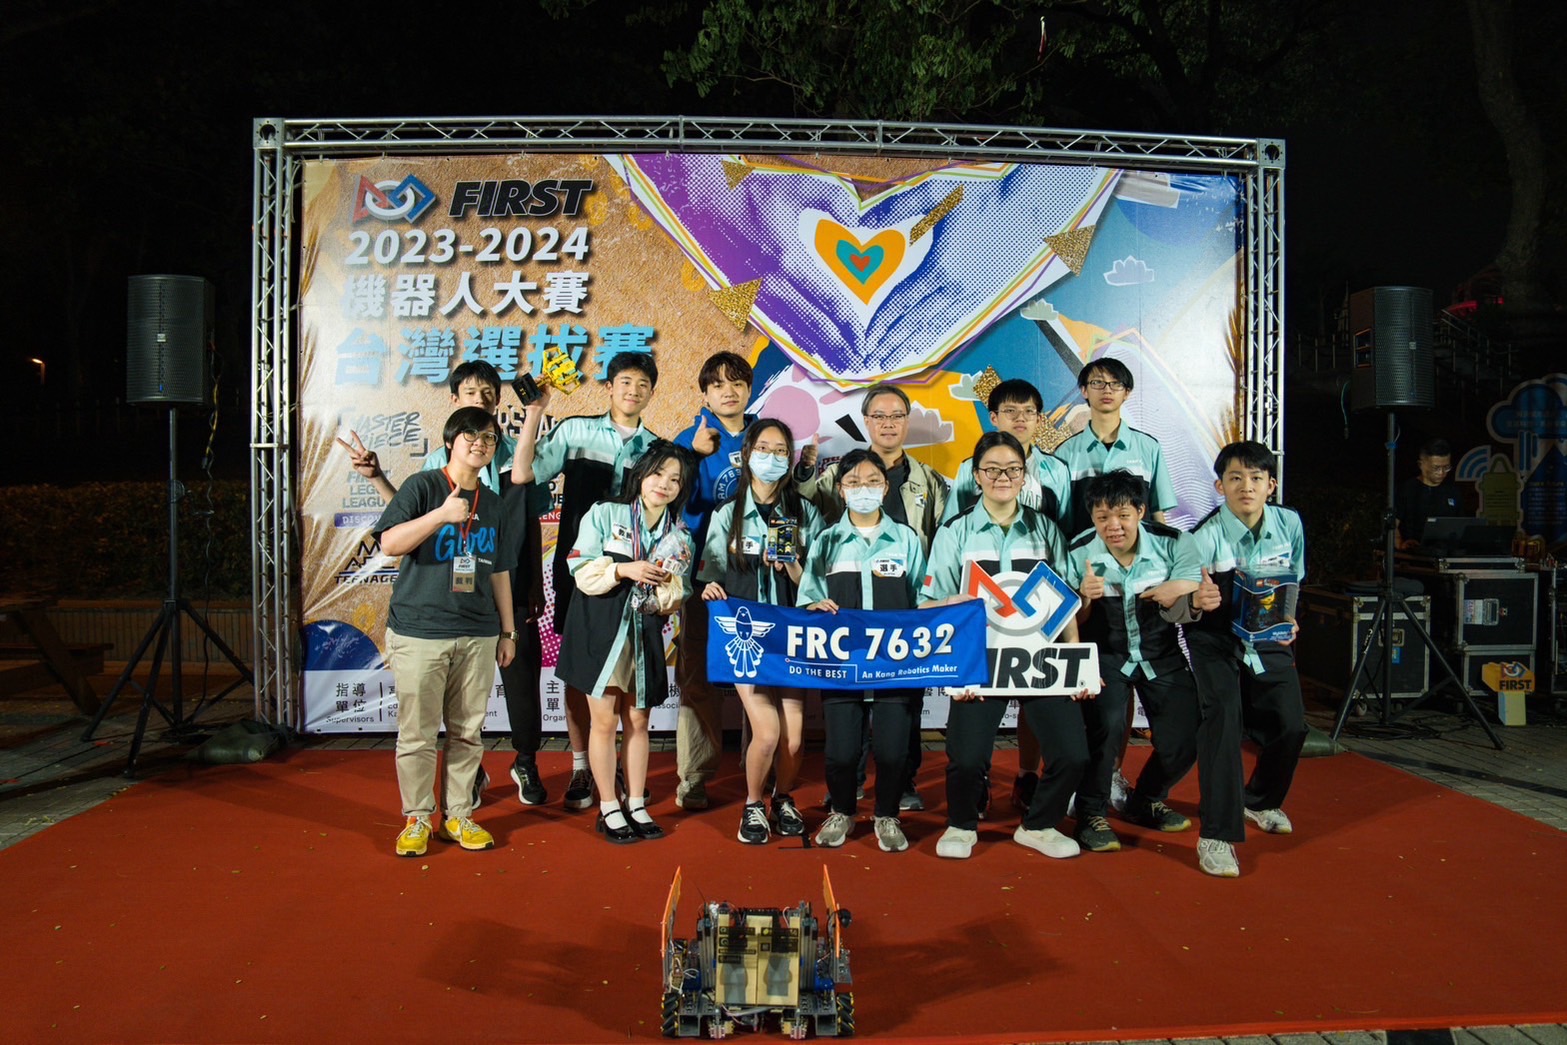 FTC24264勇奪全球FTC機器人大賽臺灣區選拔賽聯盟冠軍.jpg